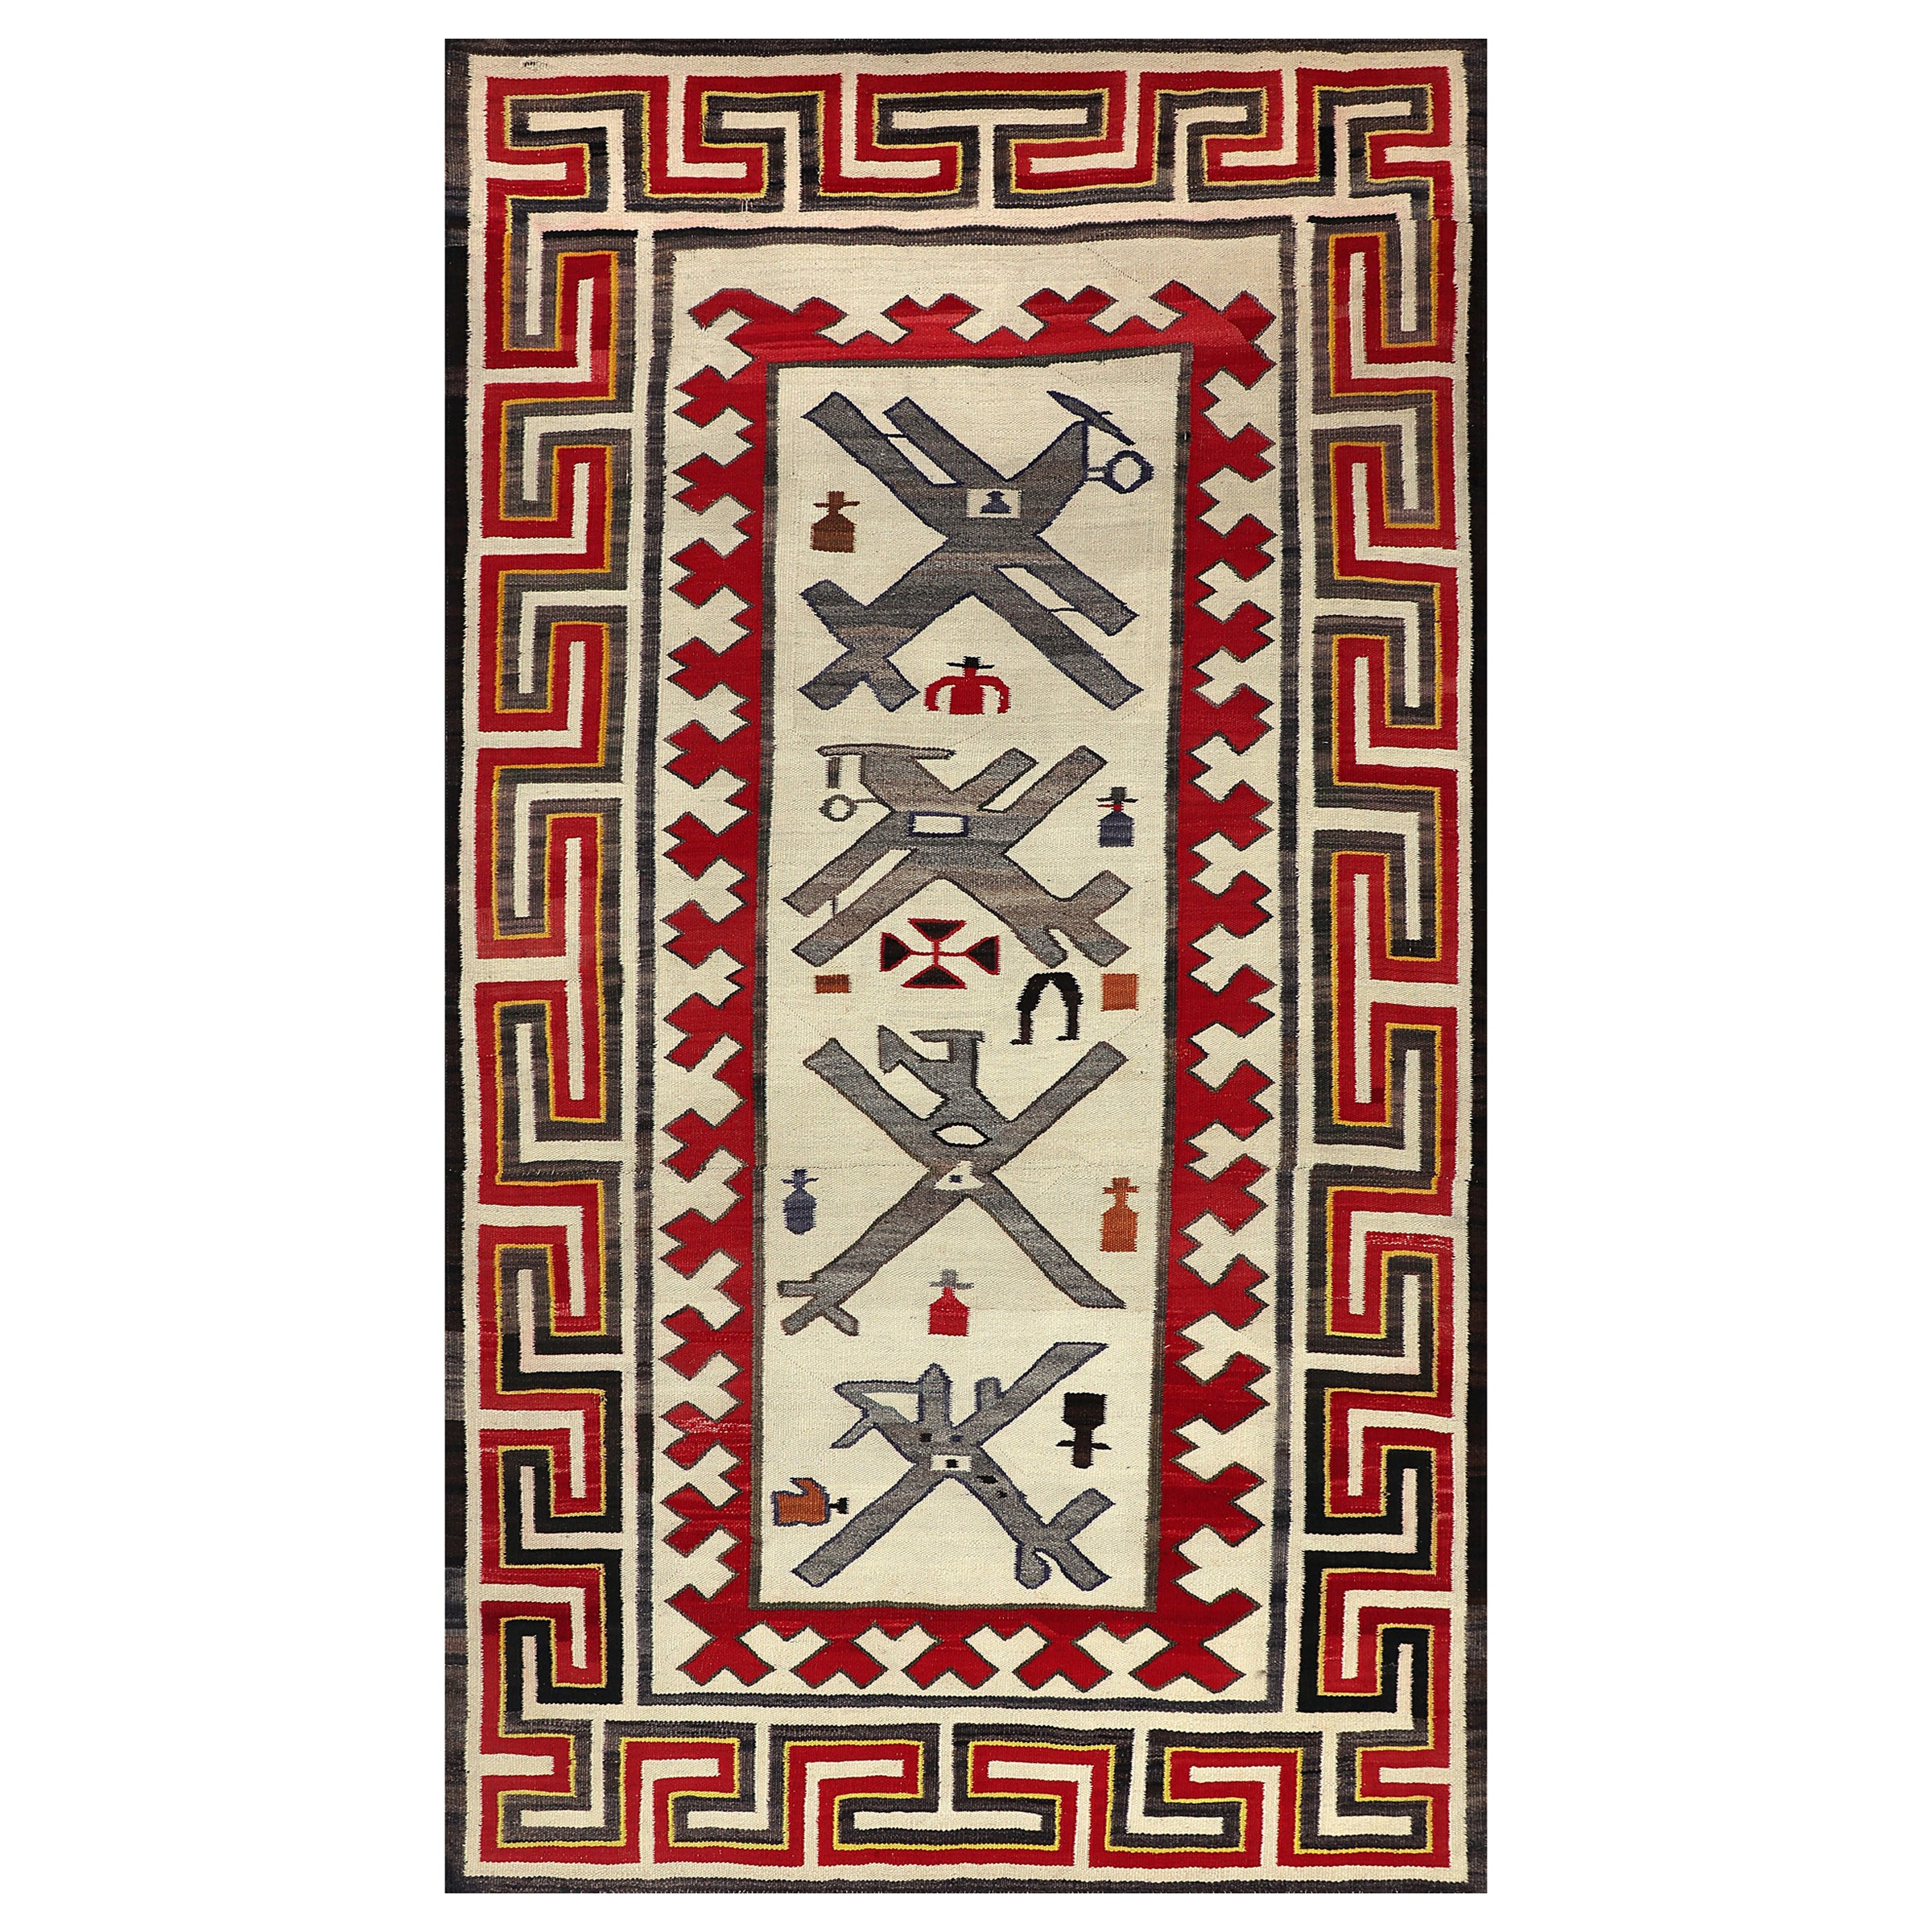 Vintage Navajo Rug, Pictorial Weaving, Airplane Design in Red, Gray, Ivory